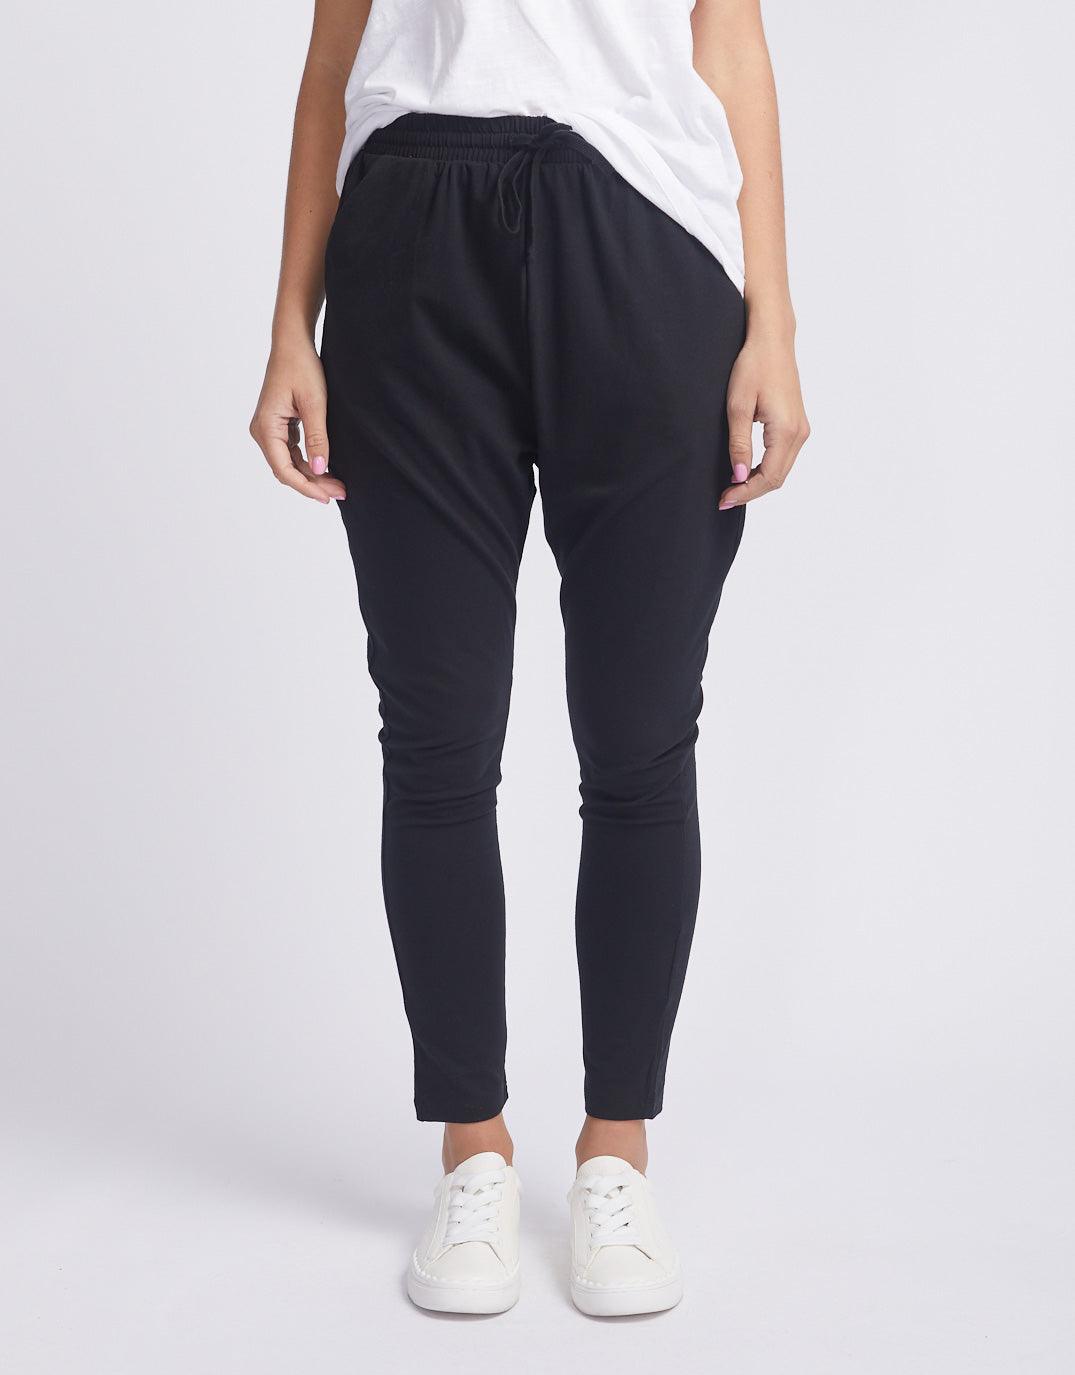 Buy Jade Lounge Pants - Black Betty Basics for Sale Online